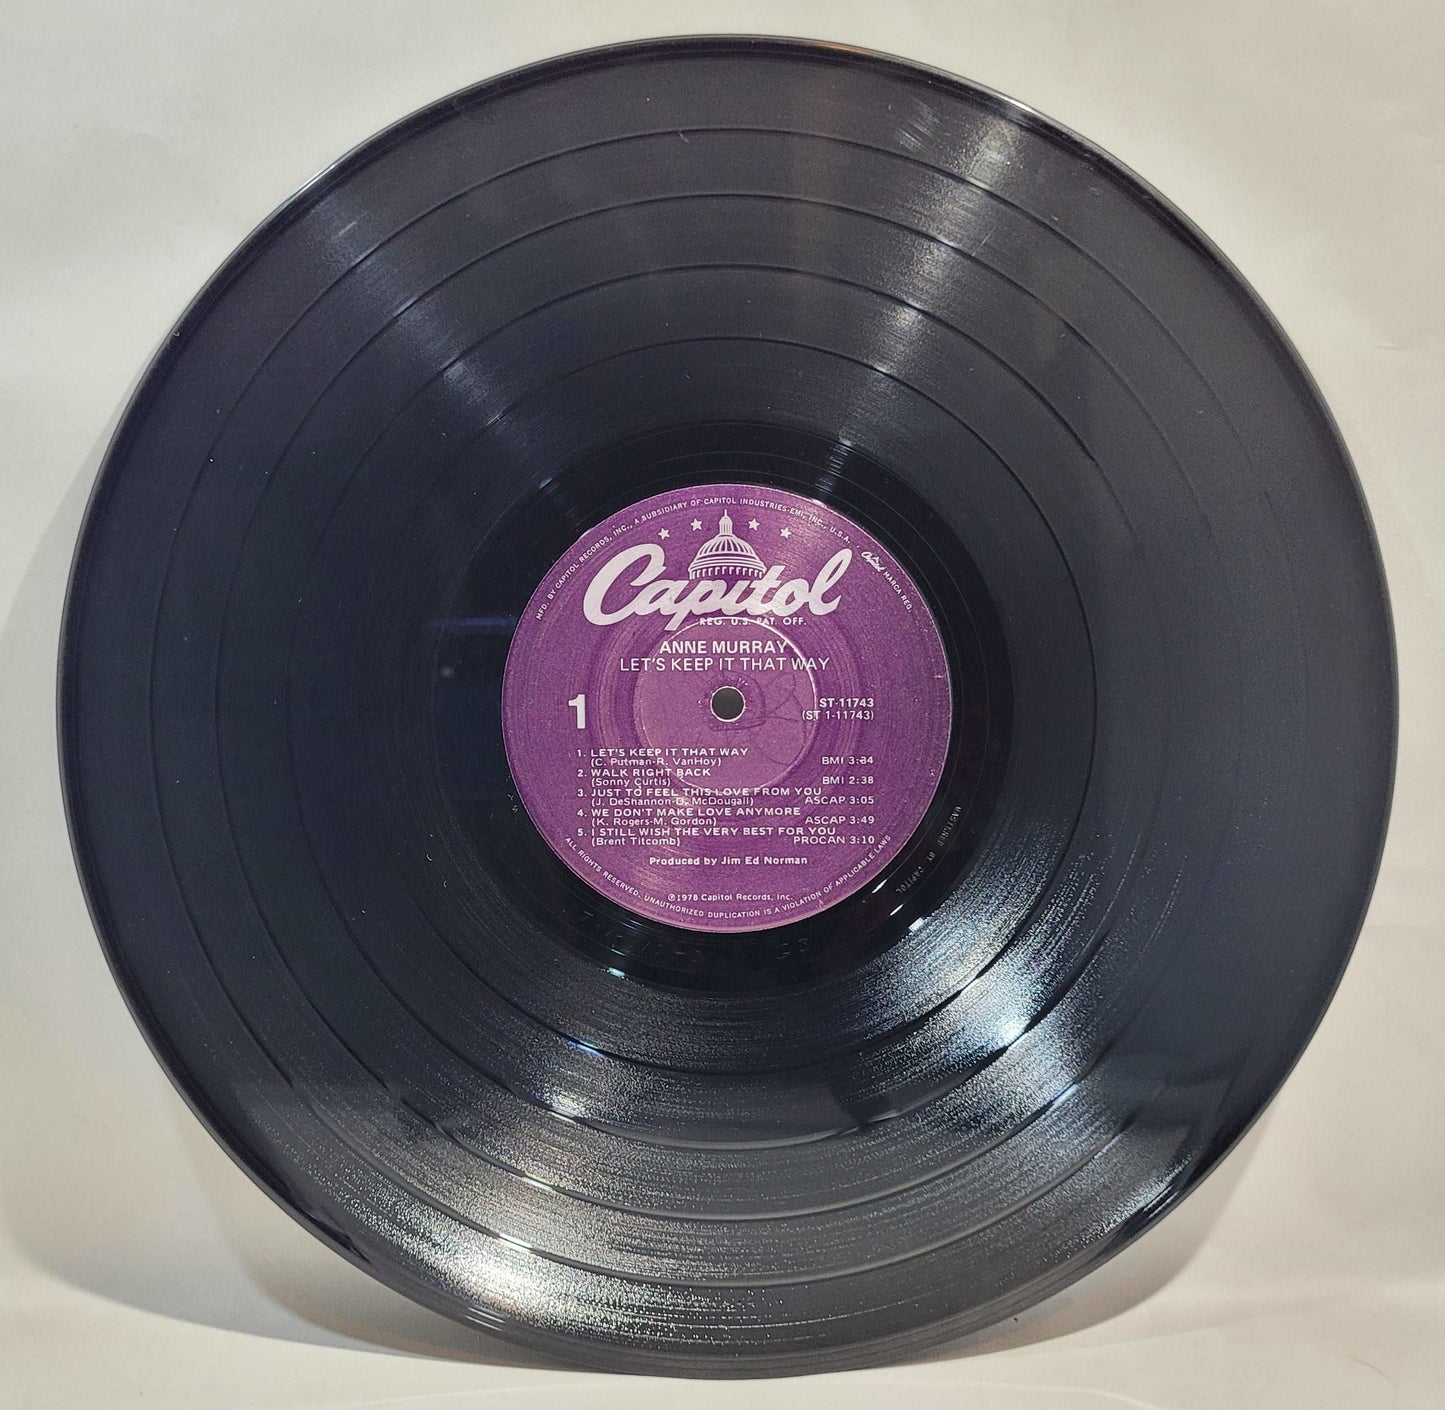 Anne Murray - Let's Keep It That Way [Vinyl Record LP] [B]